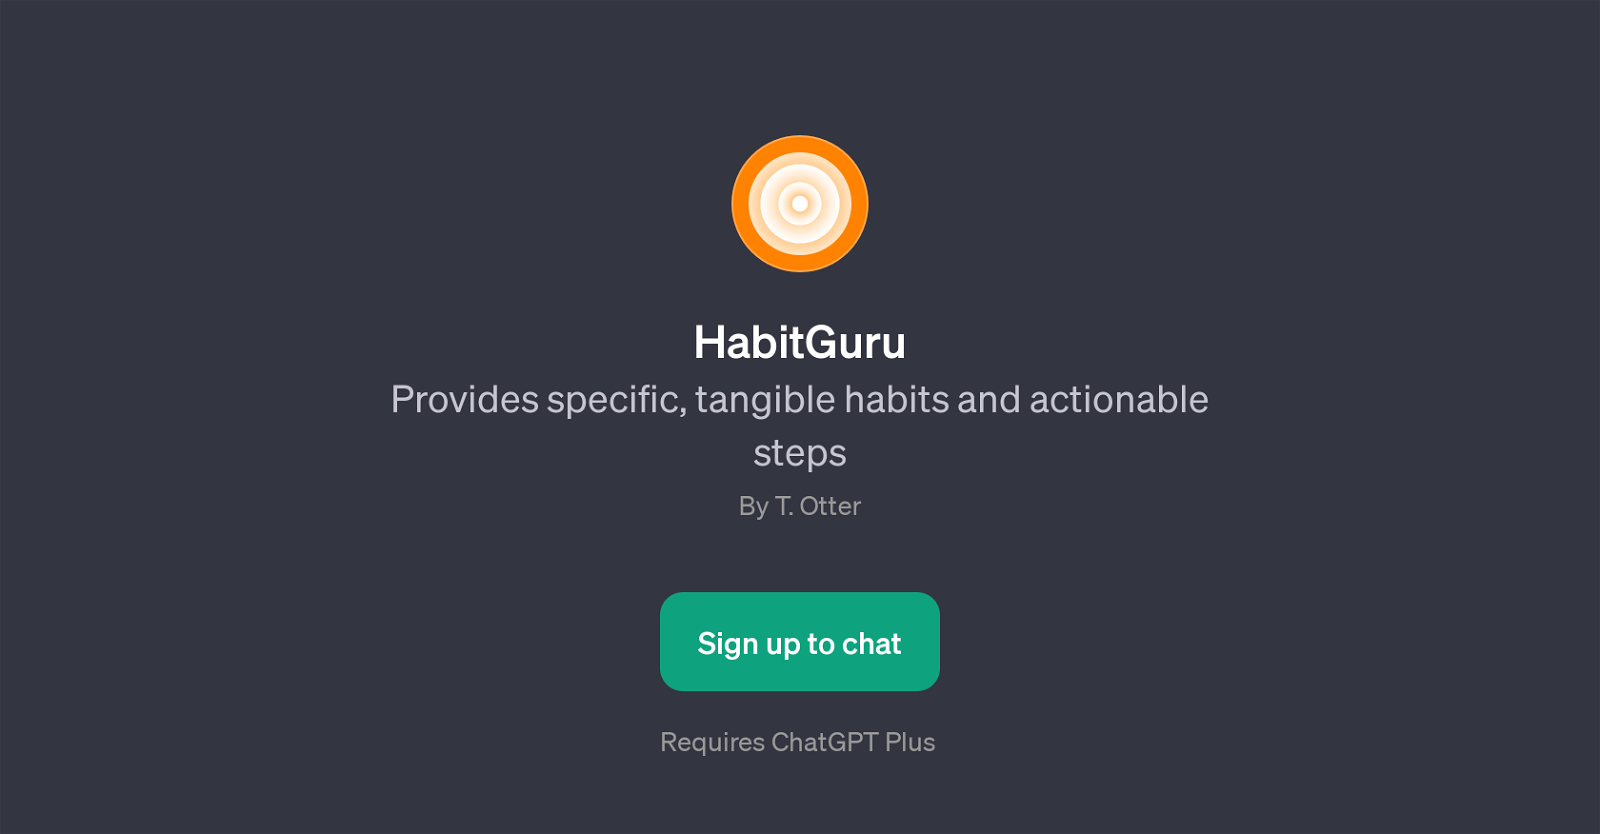 HabitGuru website